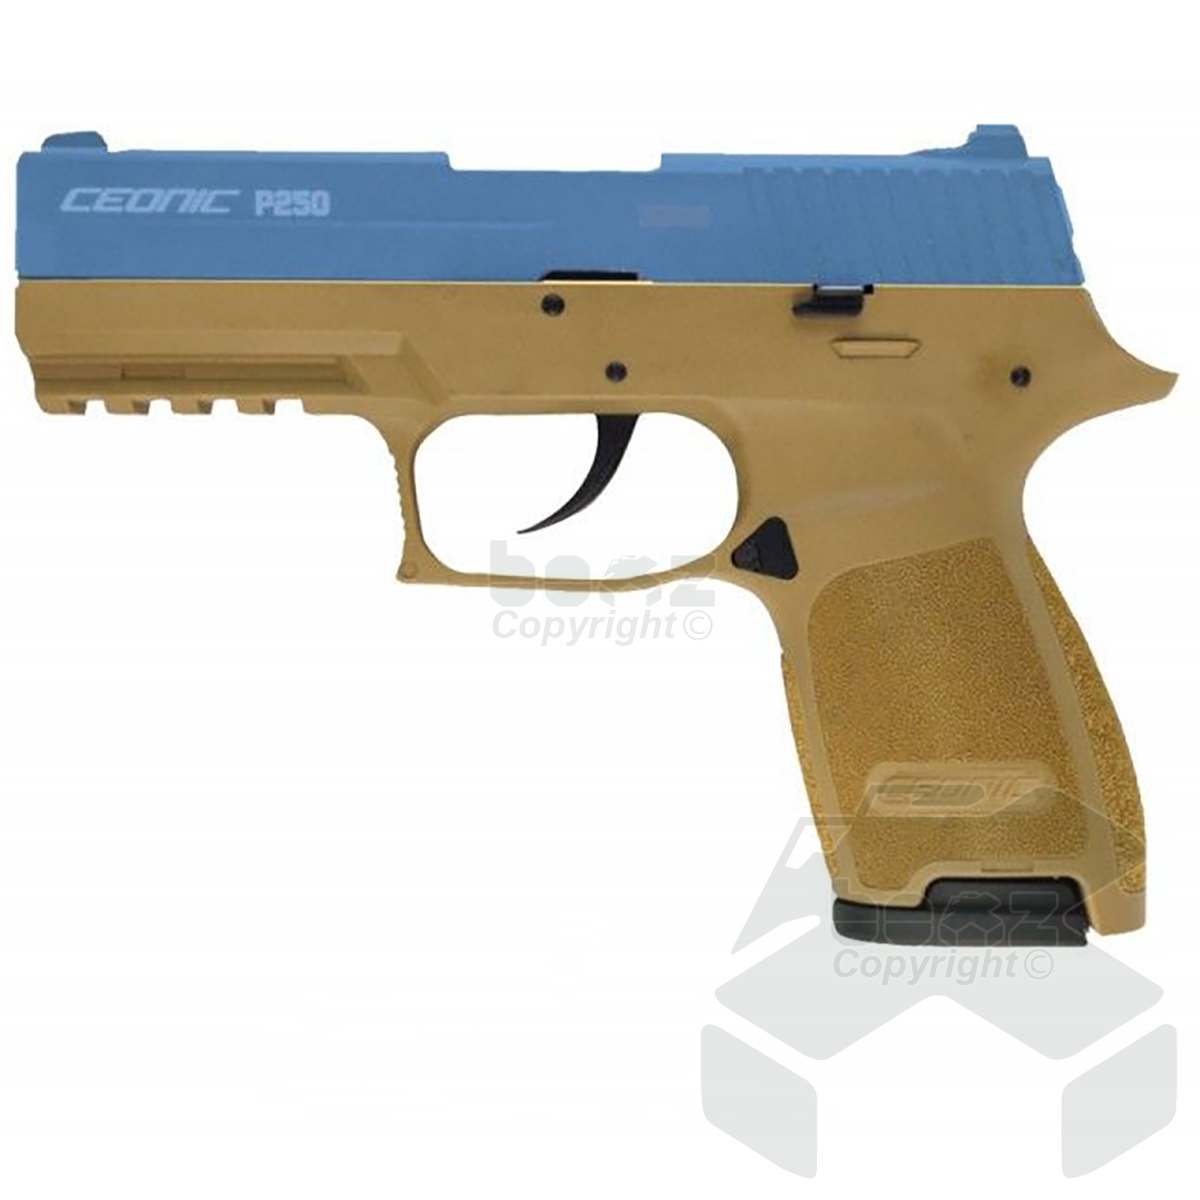 Ceonic P250 Blank Firing Pistol - 9mm - Blue Wilderness